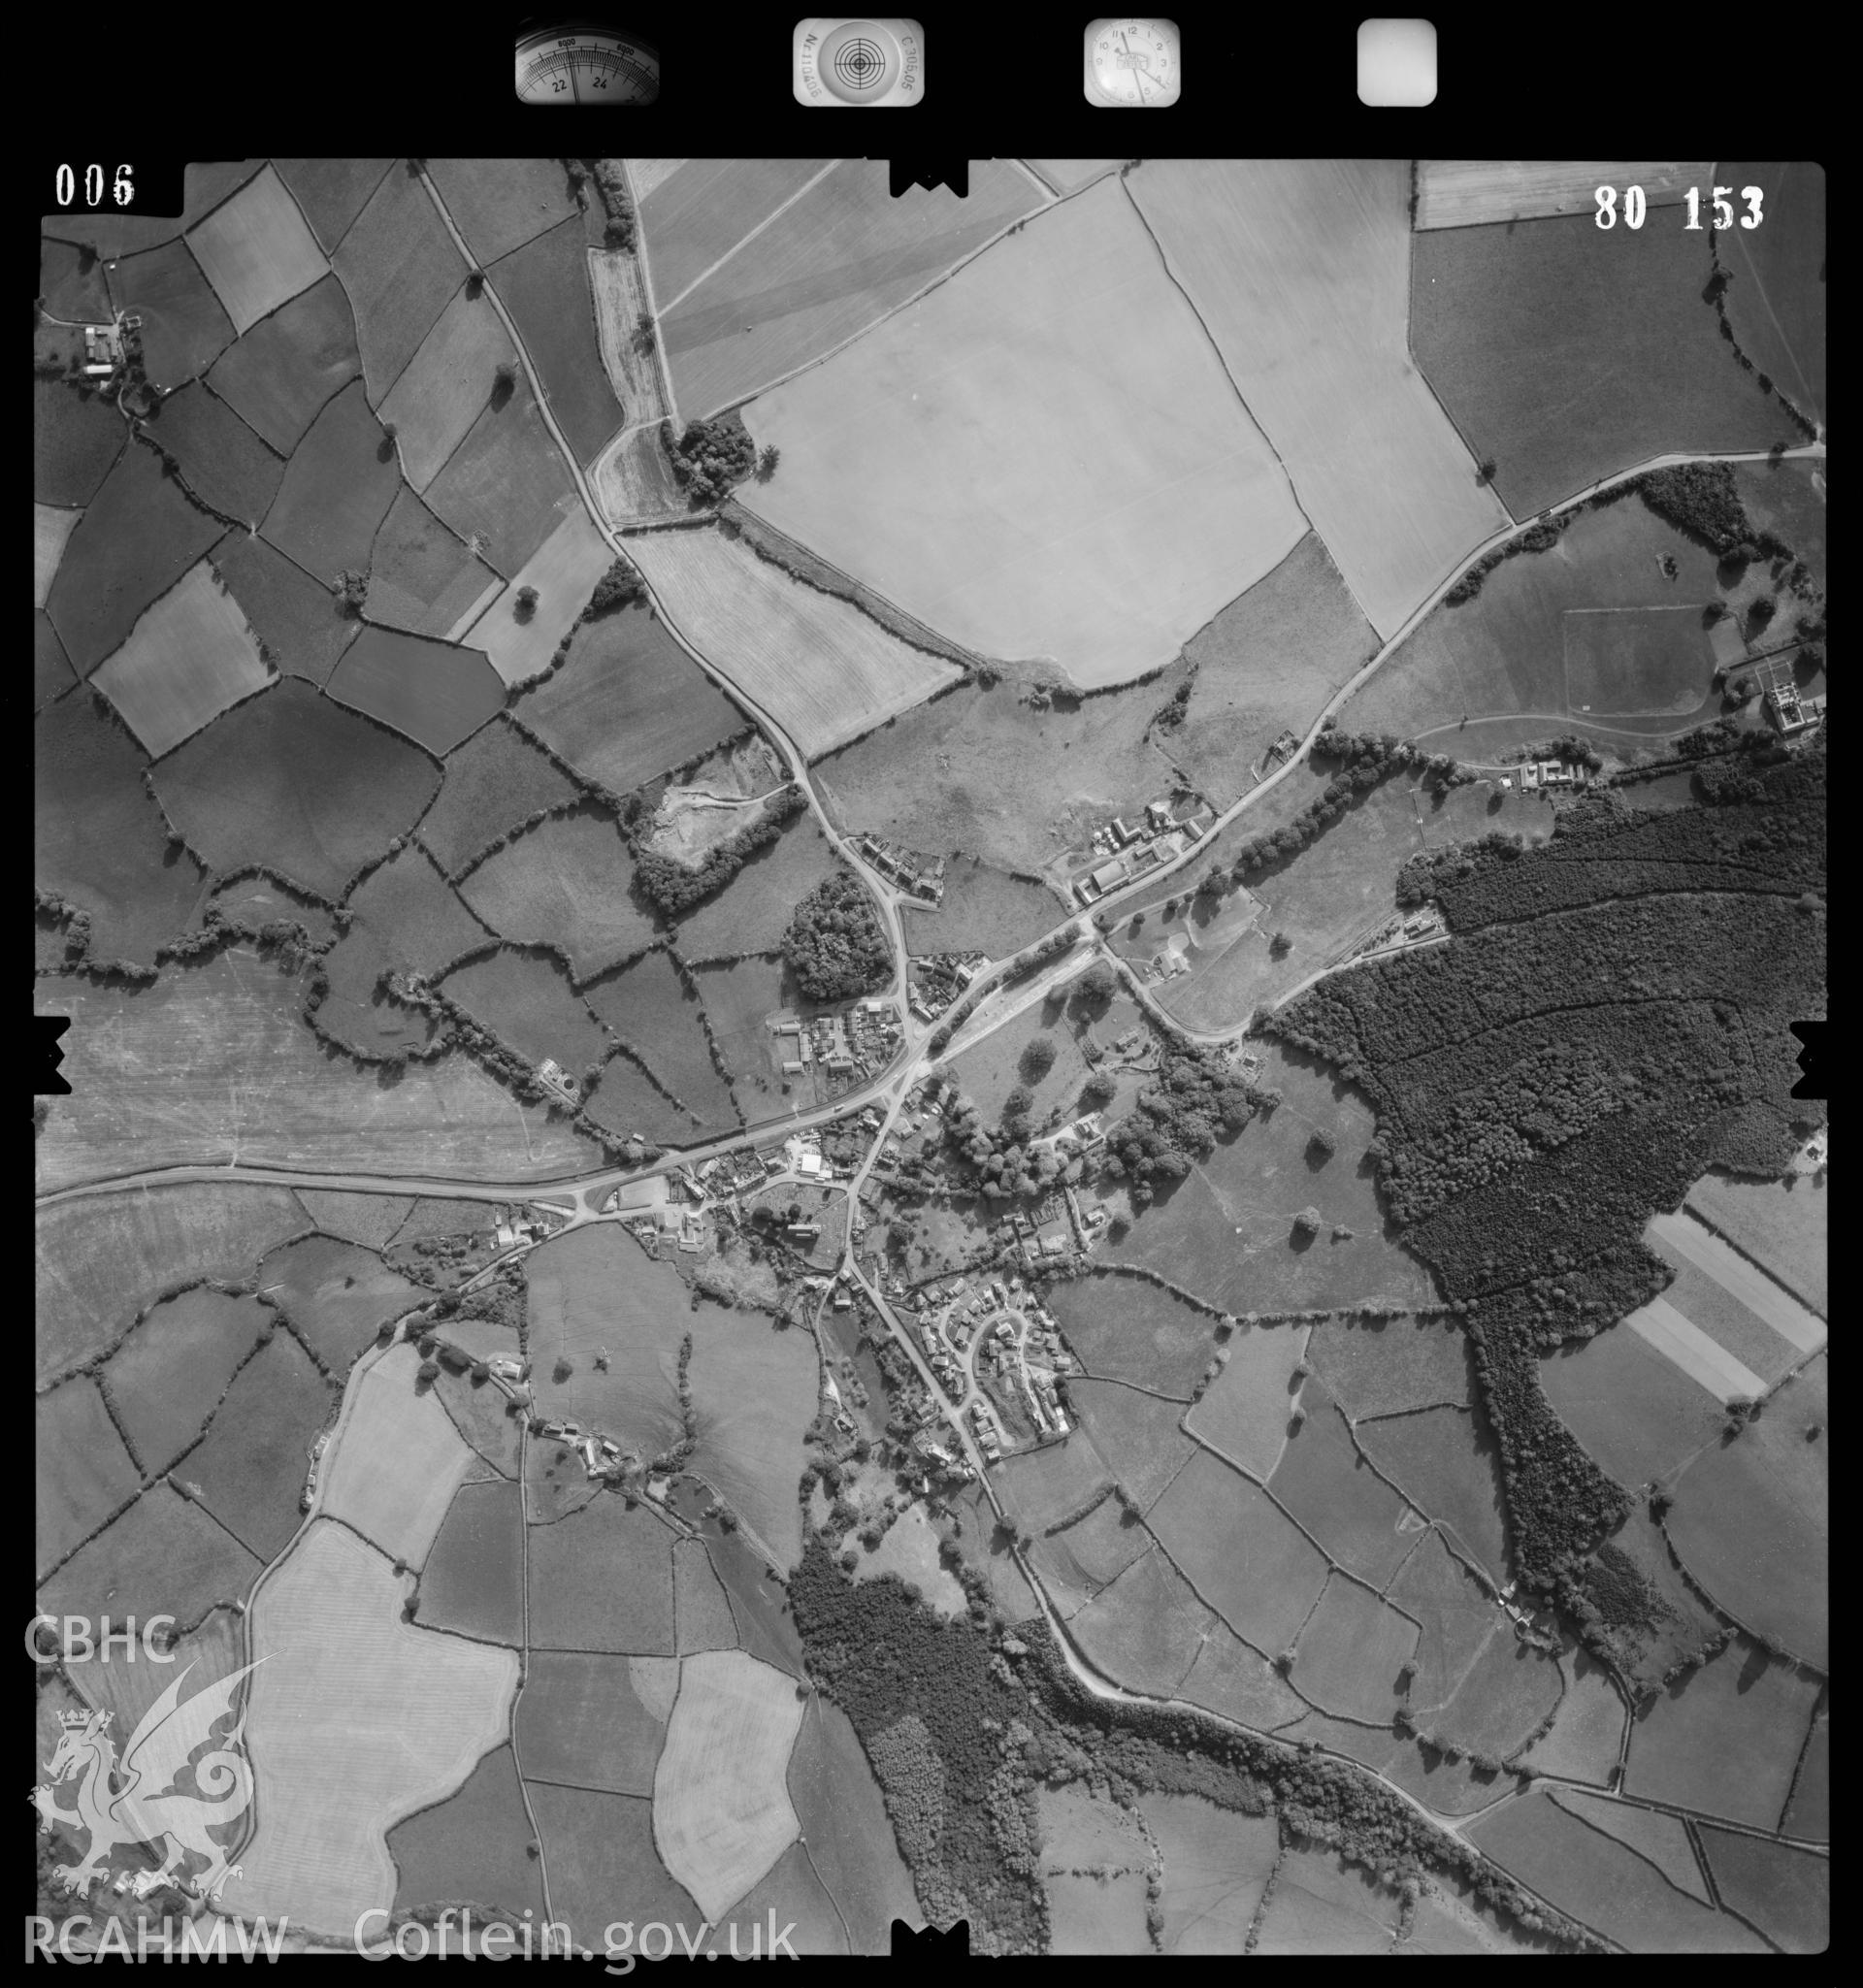 Digital copy of an aerial view of Clyro taken by Ordnance Survey, 1980.